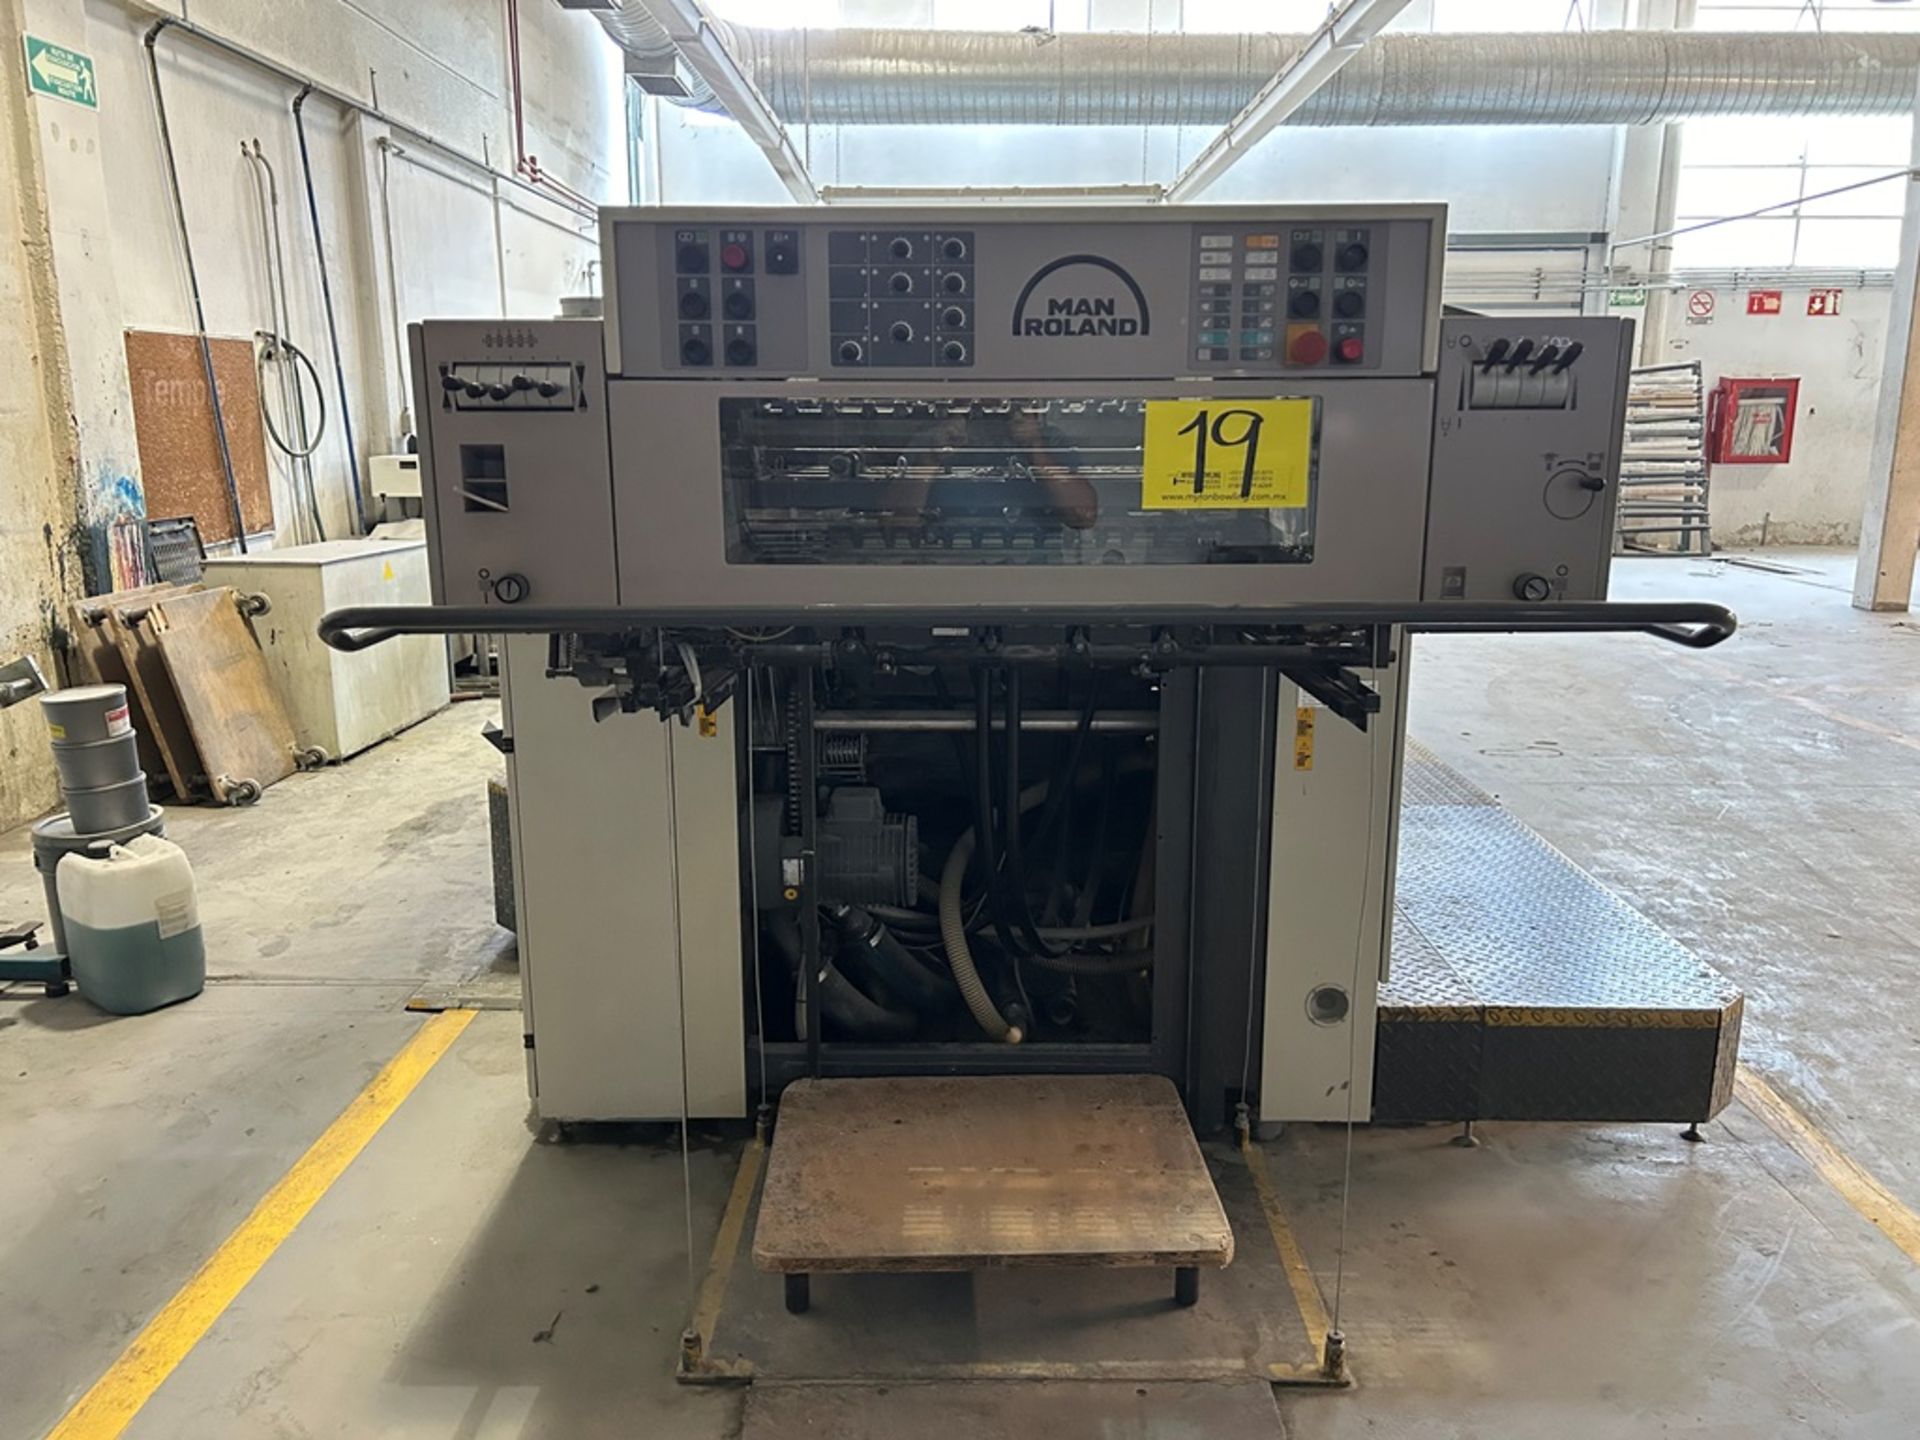 MAN ROLAND Printing Machine (Flatbed Press), Model R305 N 5/0 1/4, Serial No. 28605B, Year 2000, 22